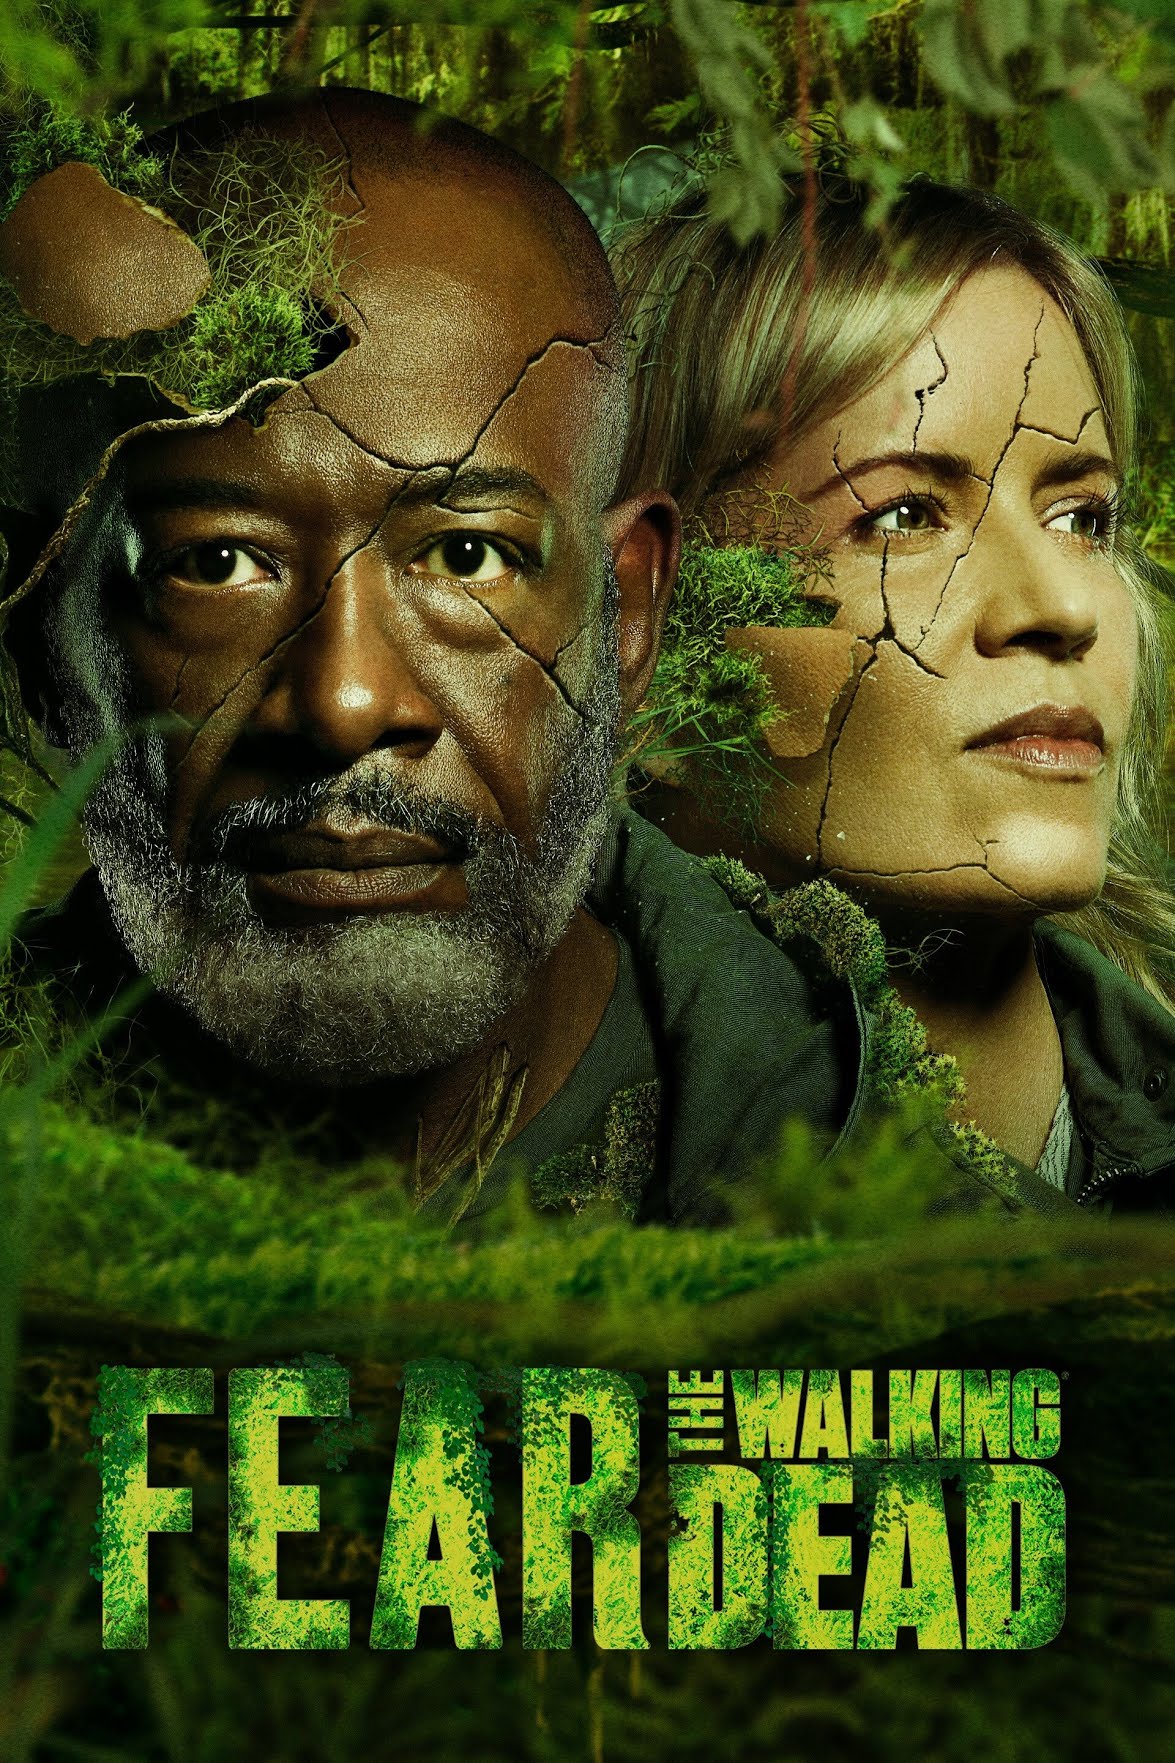 Fear the Walking Dead S08E03 1080p WEB H264-CAKES